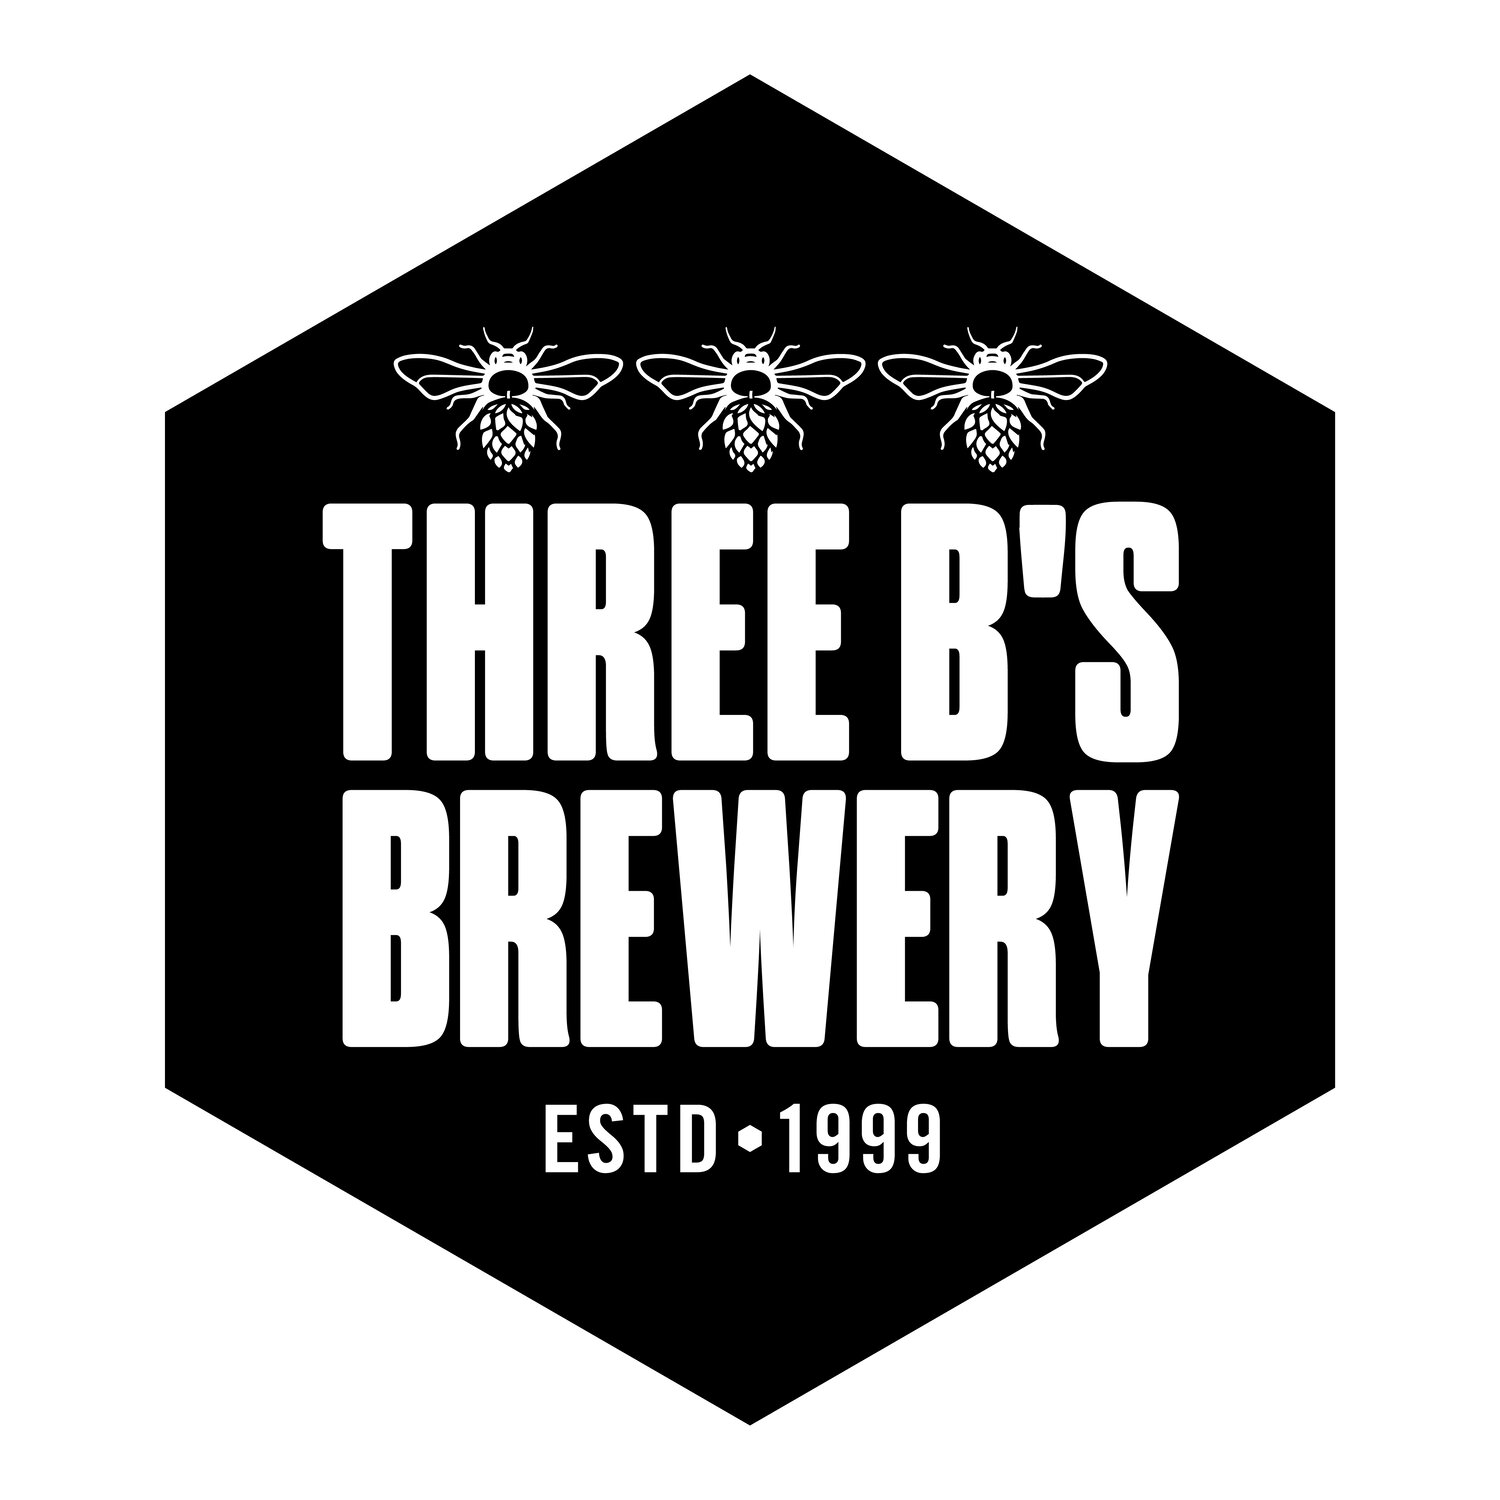 www.threebsbrewery.co.uk